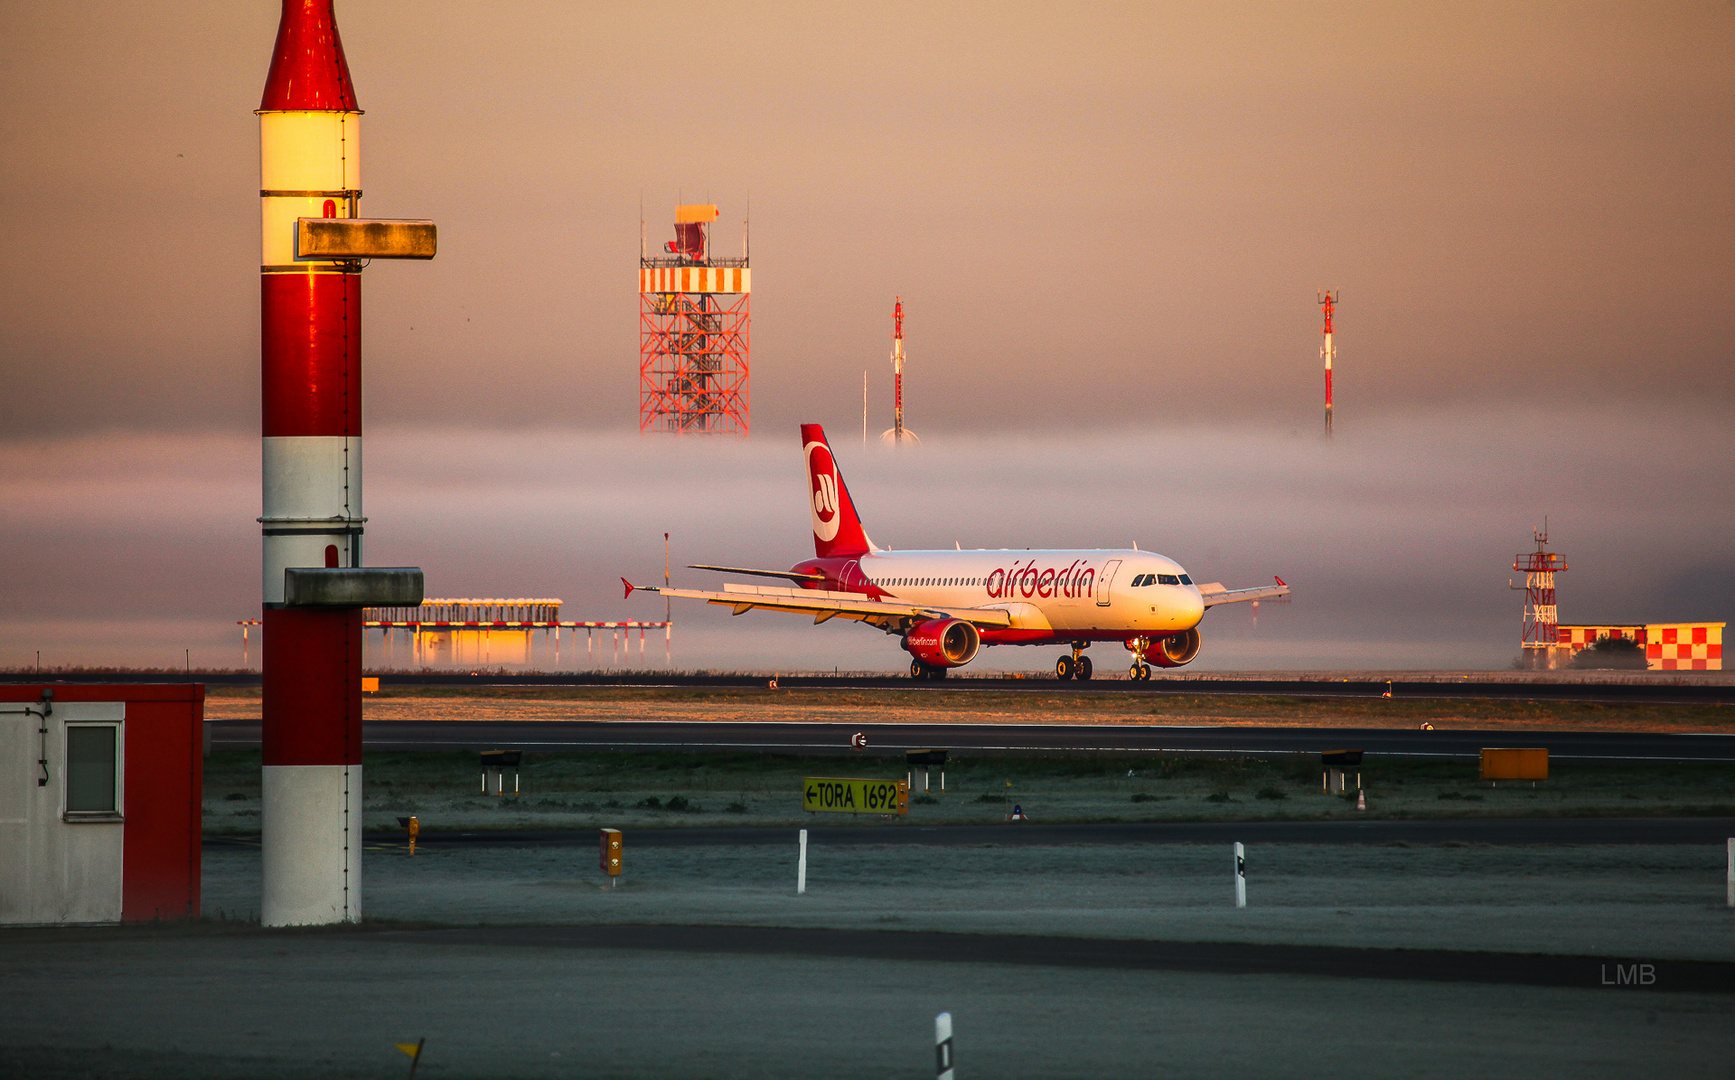 Airline im Nebel